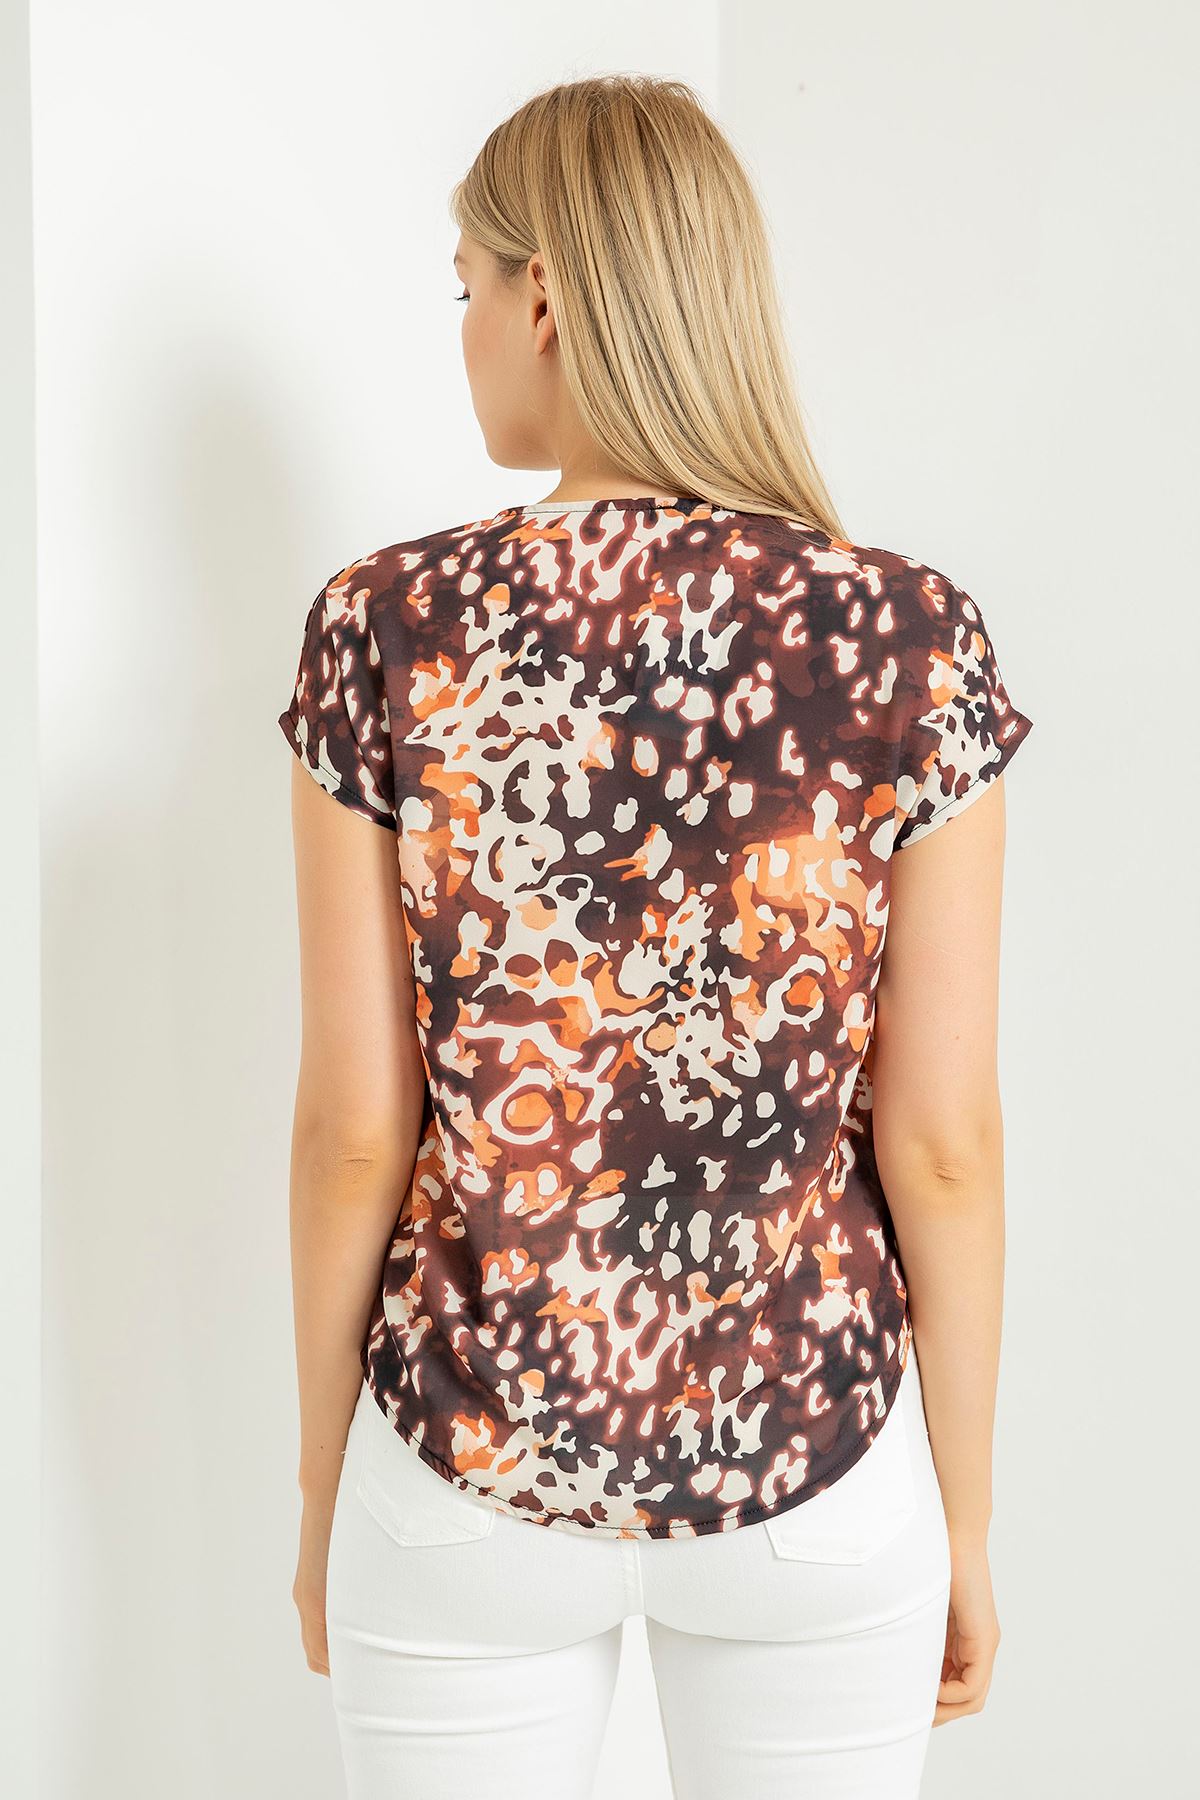 Jessica Blouse Short Sleeve V-Neck Leopard Print Blouse - Chanterelle 